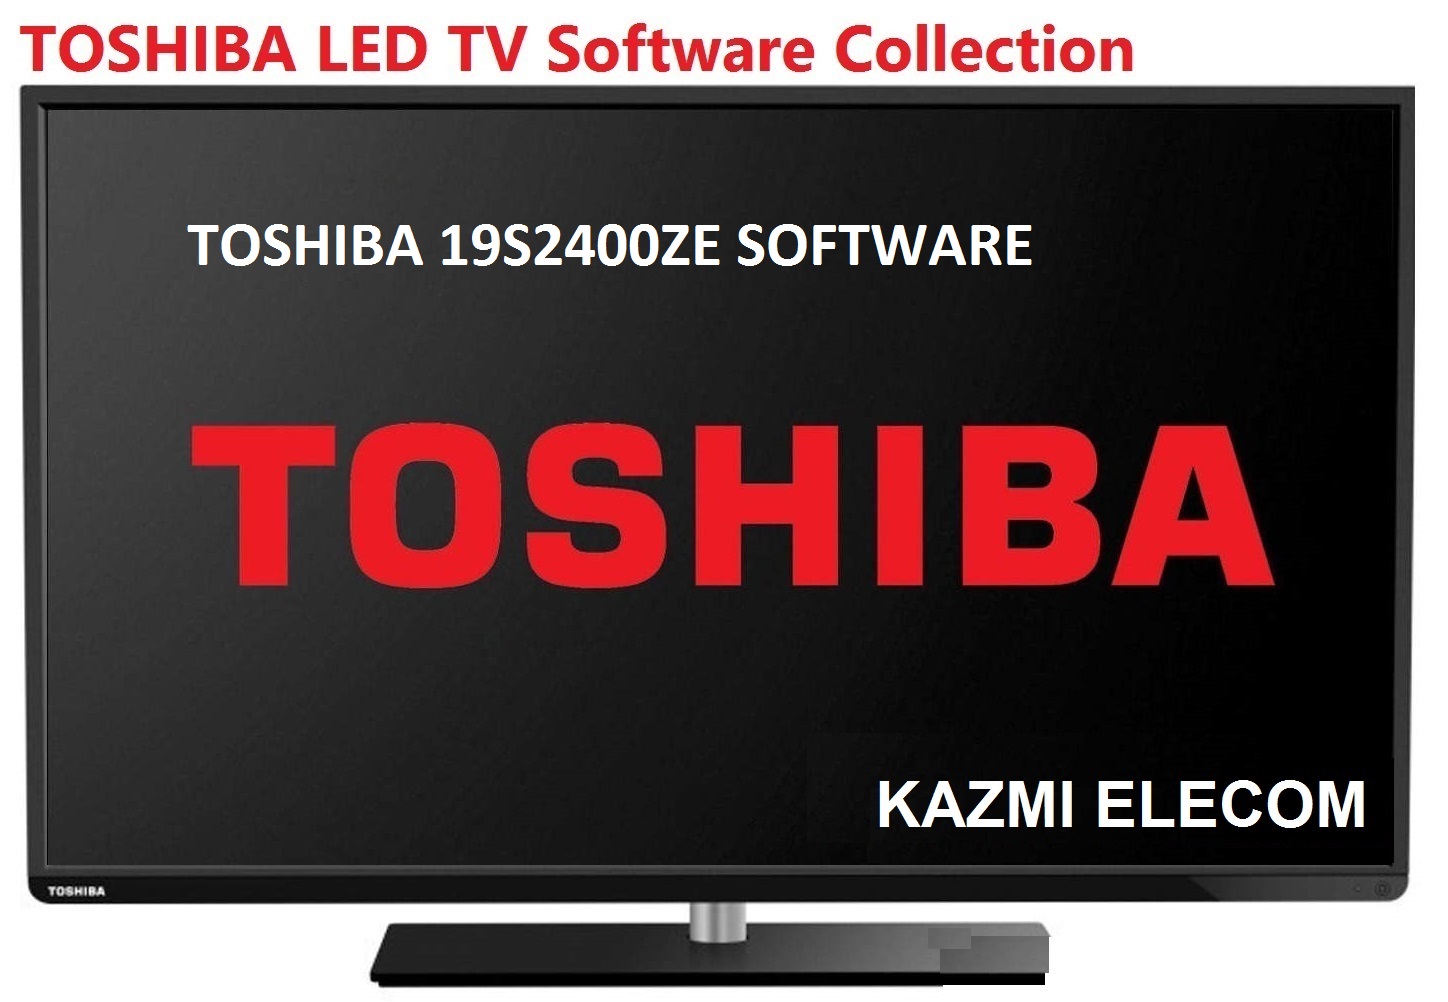 Toshiba 19S2400Ze